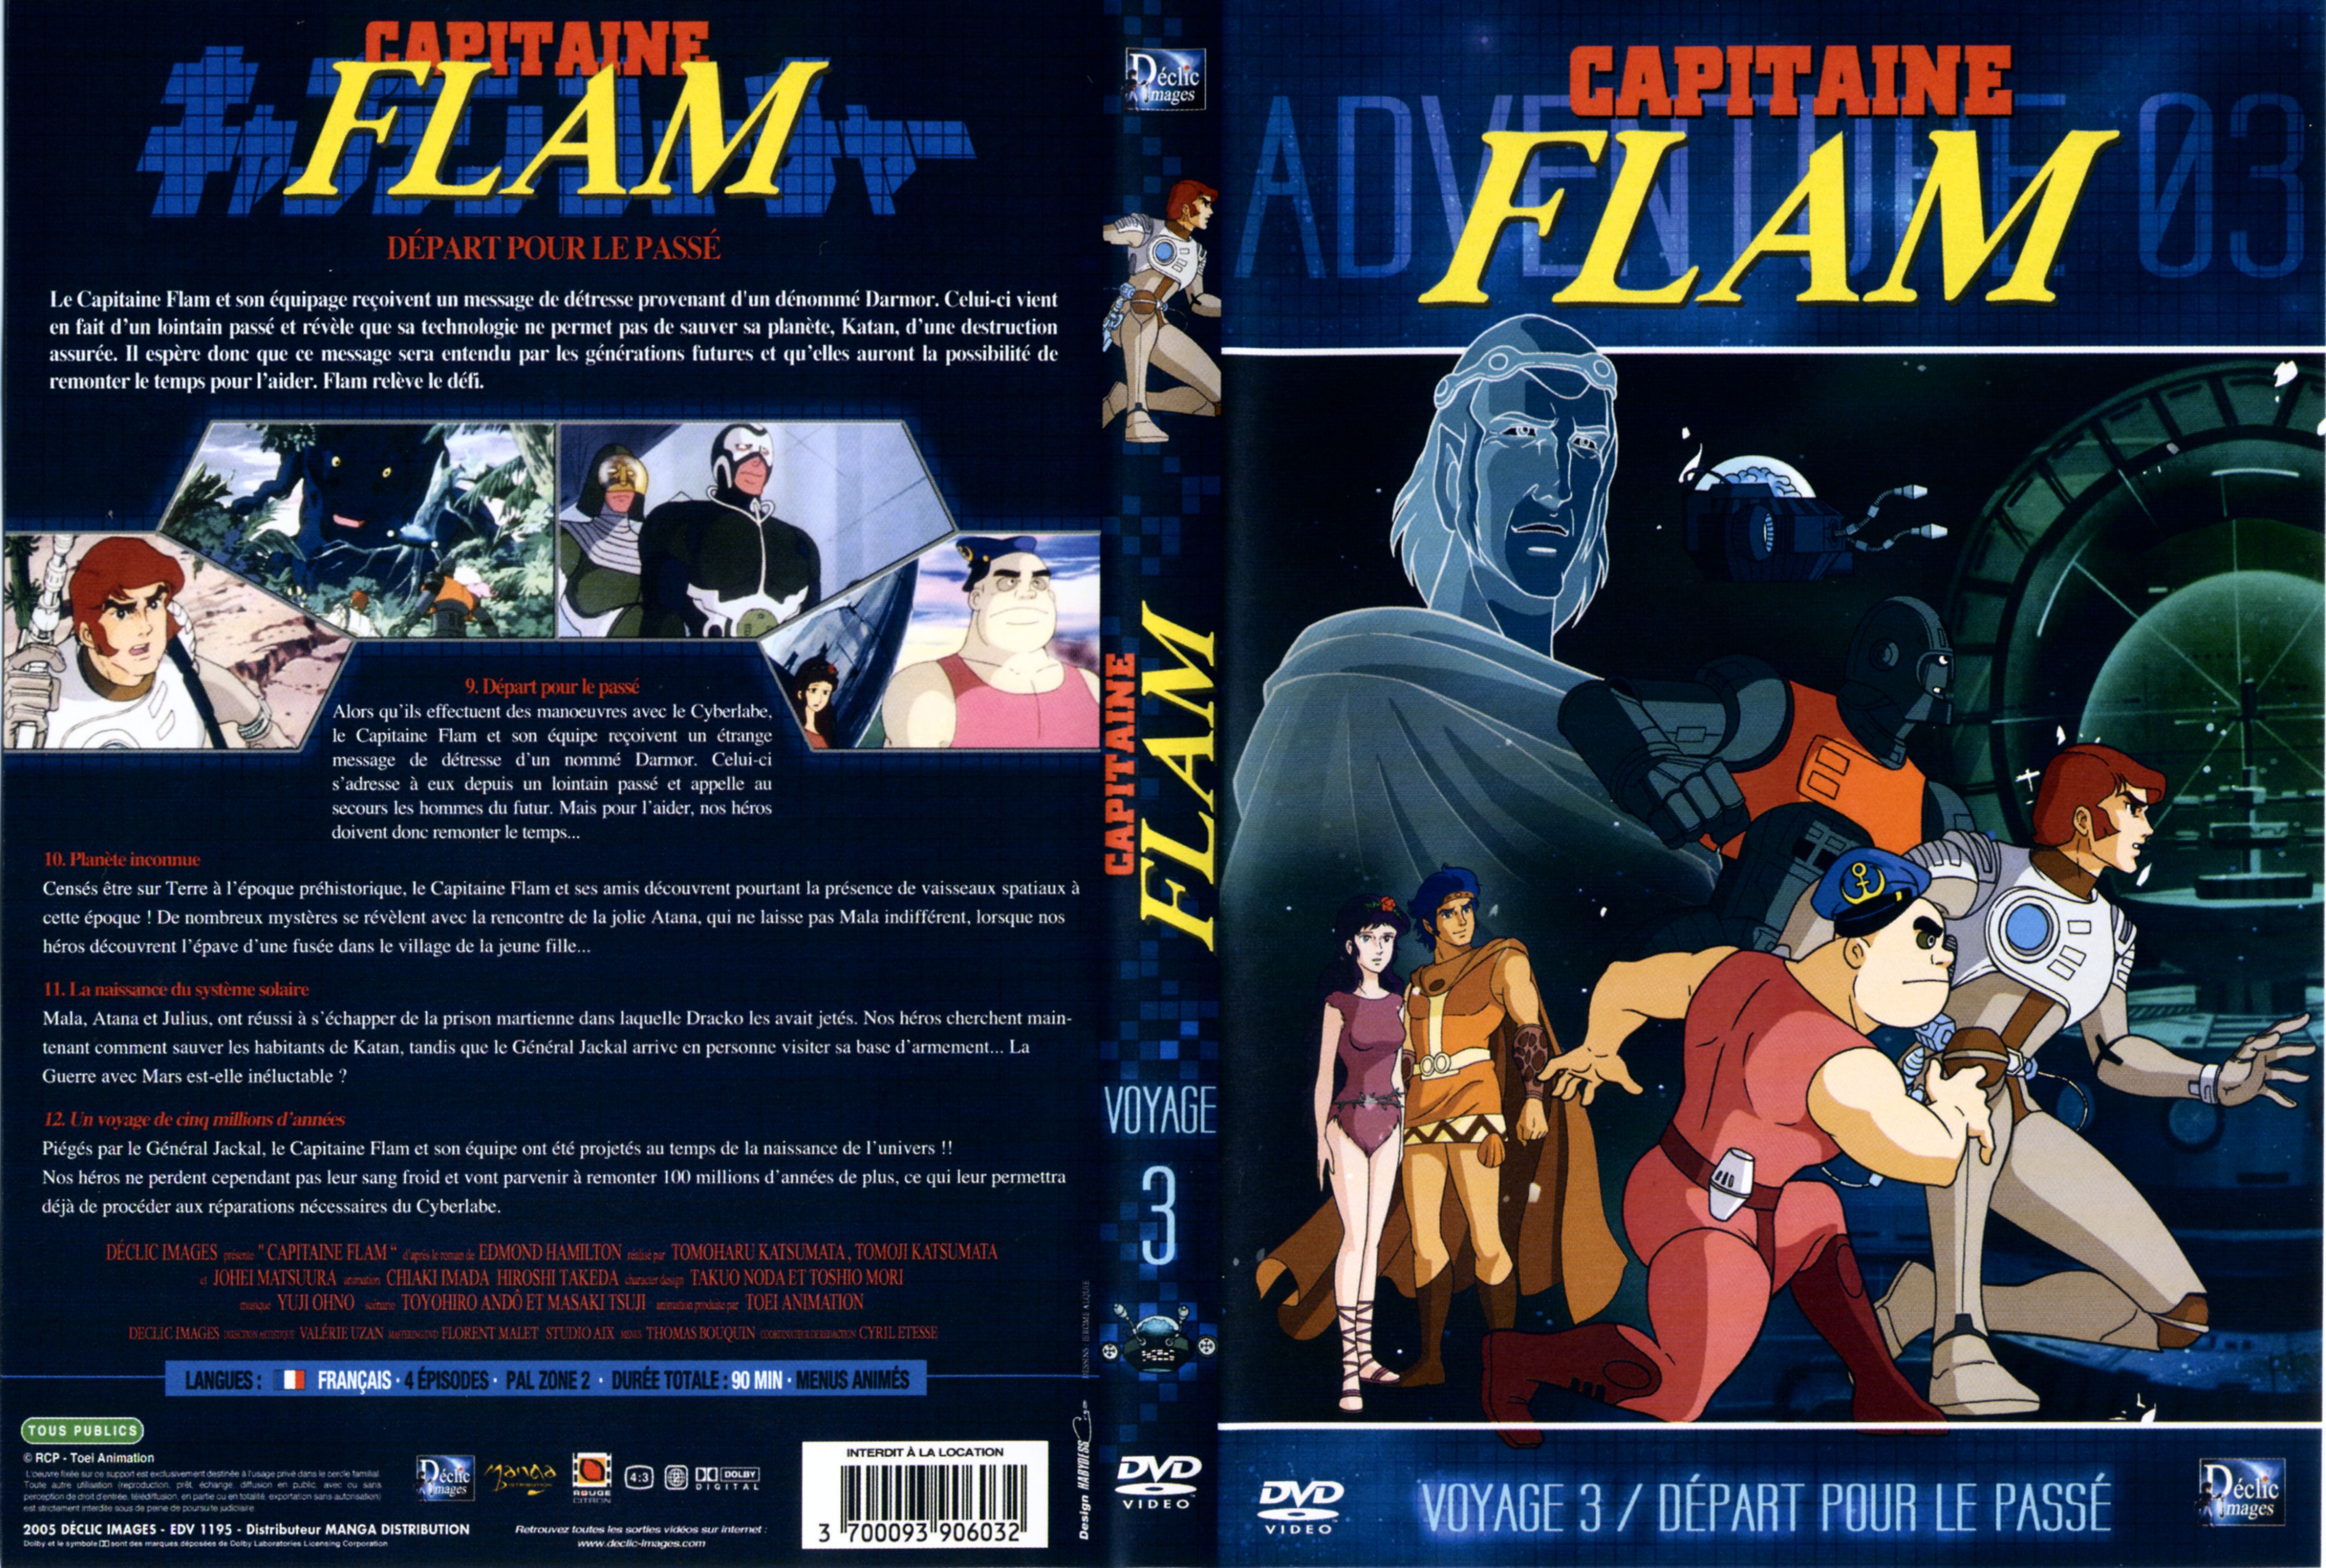 Jaquette DVD Capitaine Flam vol 3 (DECLIC IMAGES)